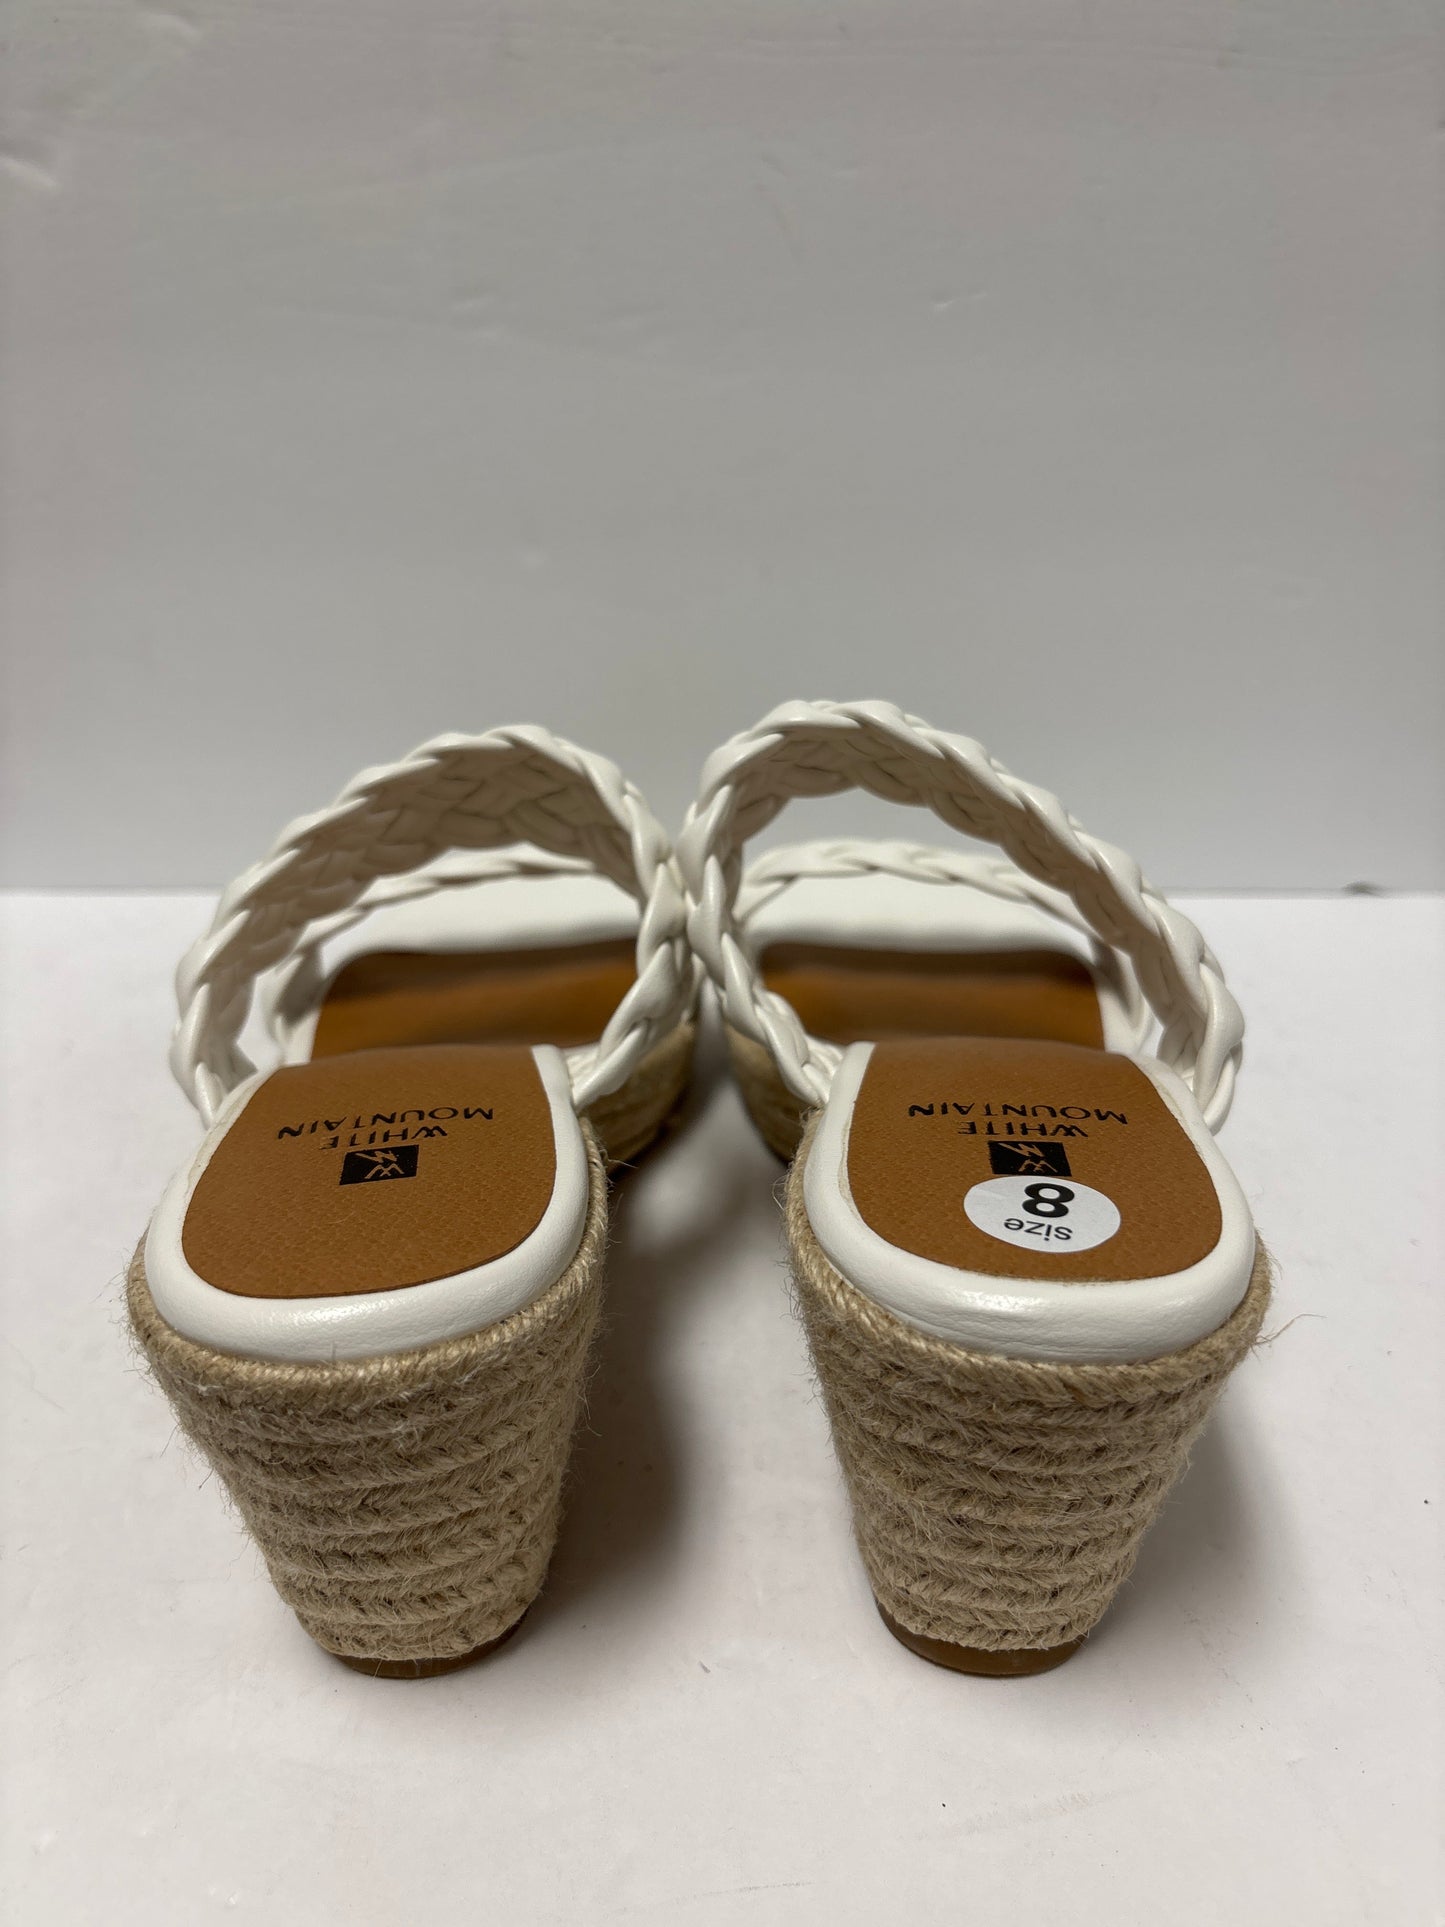 White Sandals Heels Wedge White Mountain, Size 8